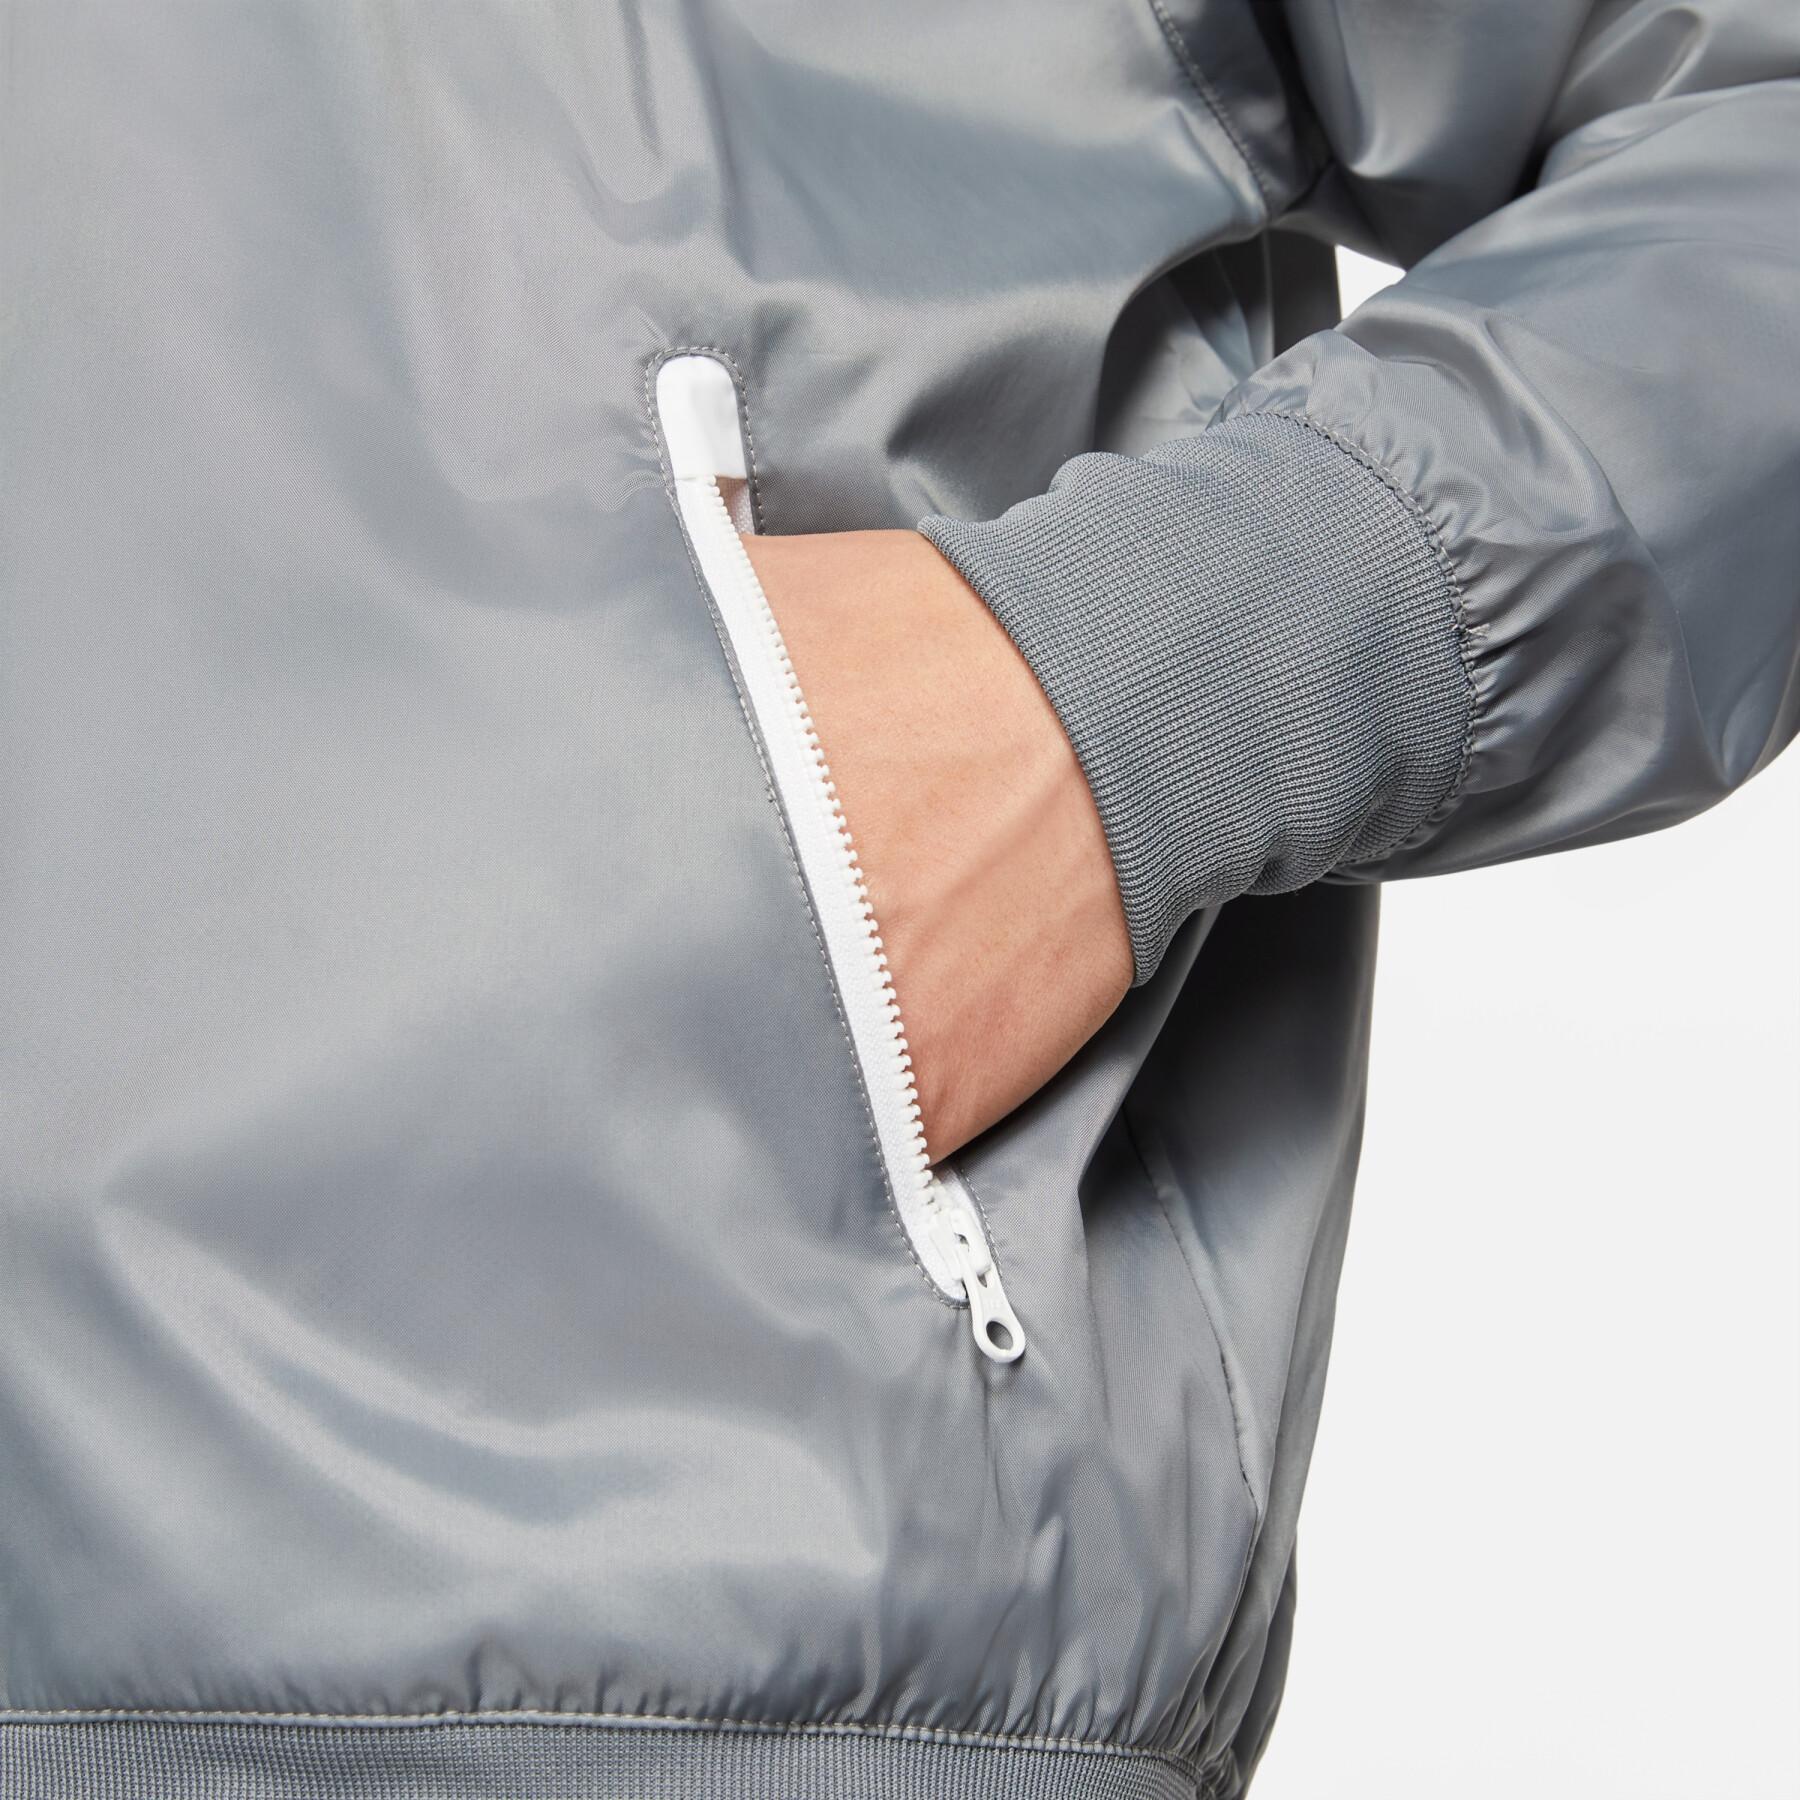 Sweat jacket Nike Sportswear Heritage Essentials Windrunner